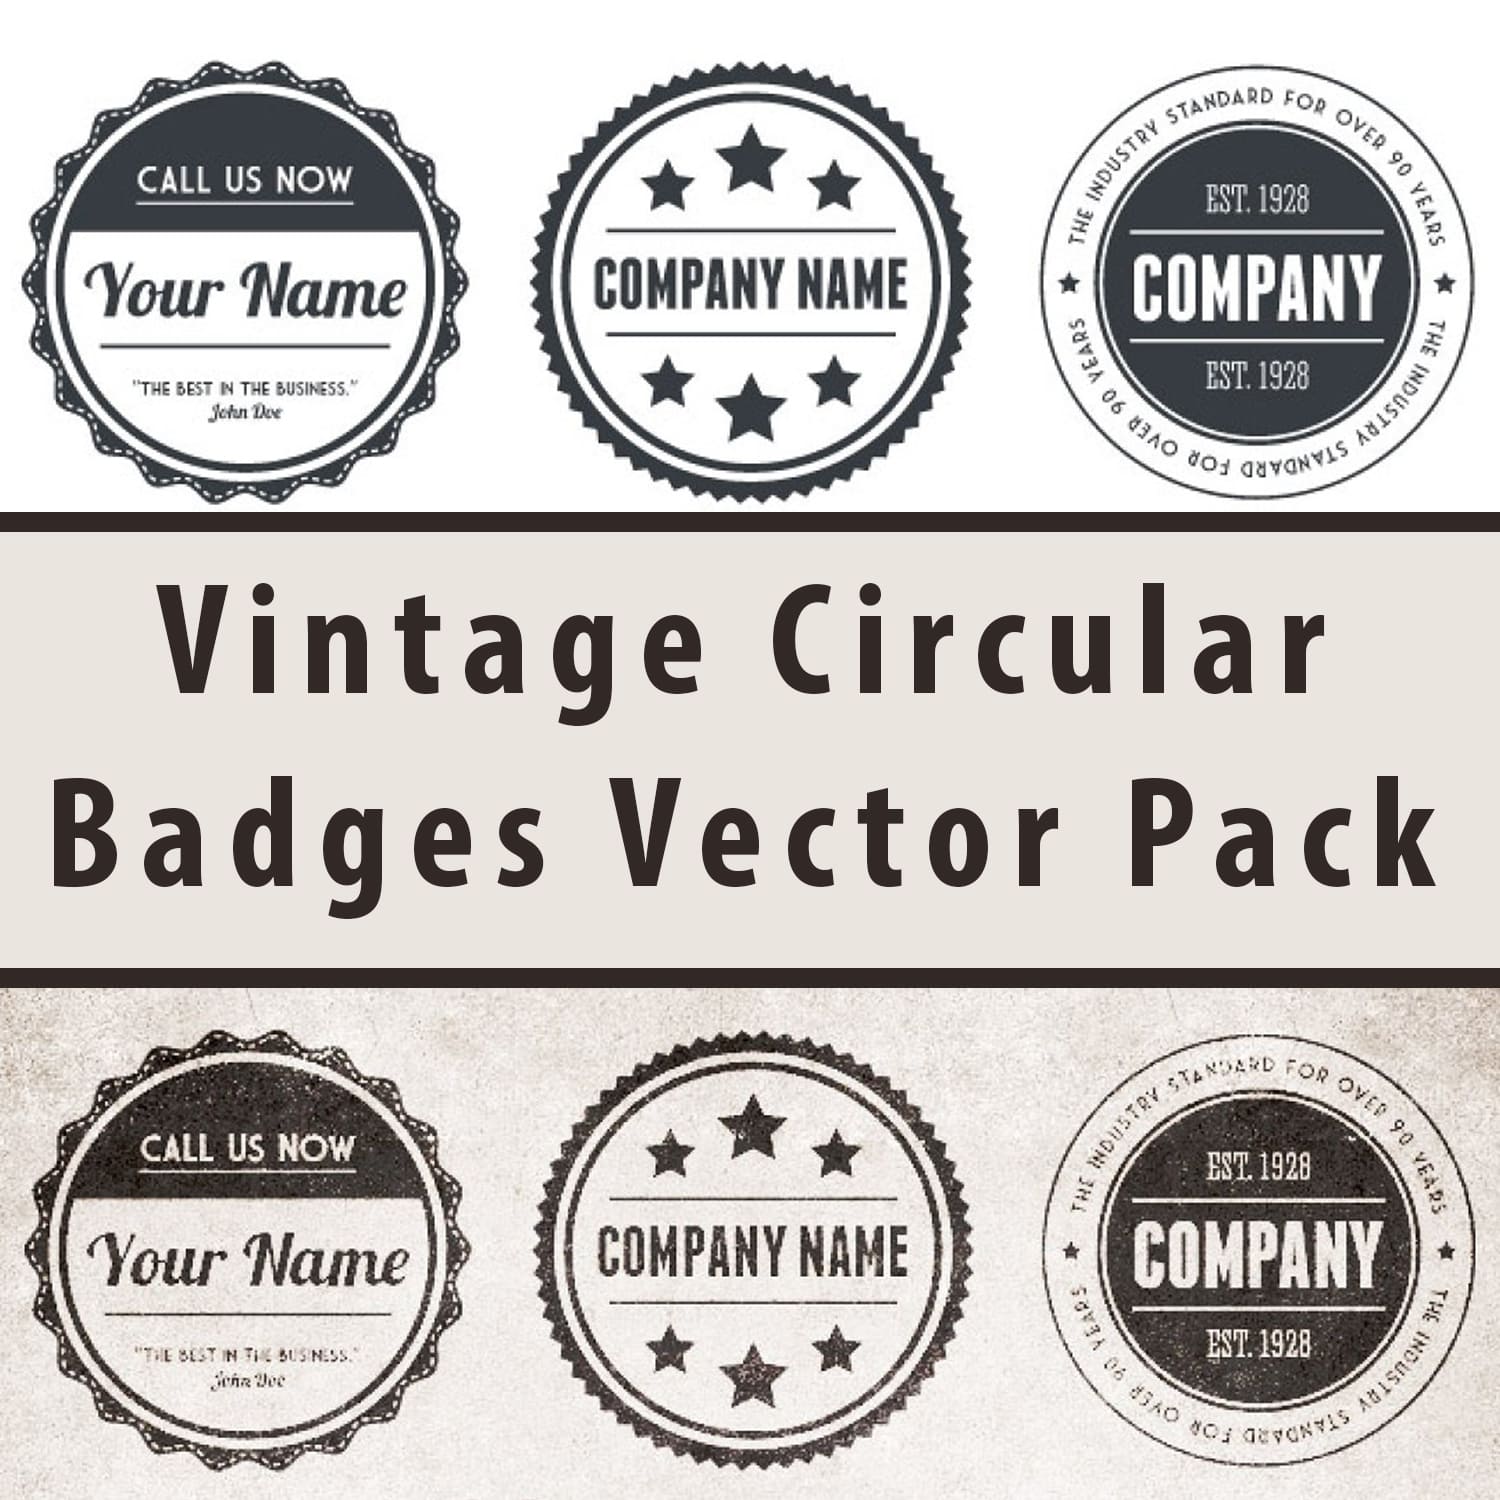 Vintage Circular Badges Vector Pack main cover.